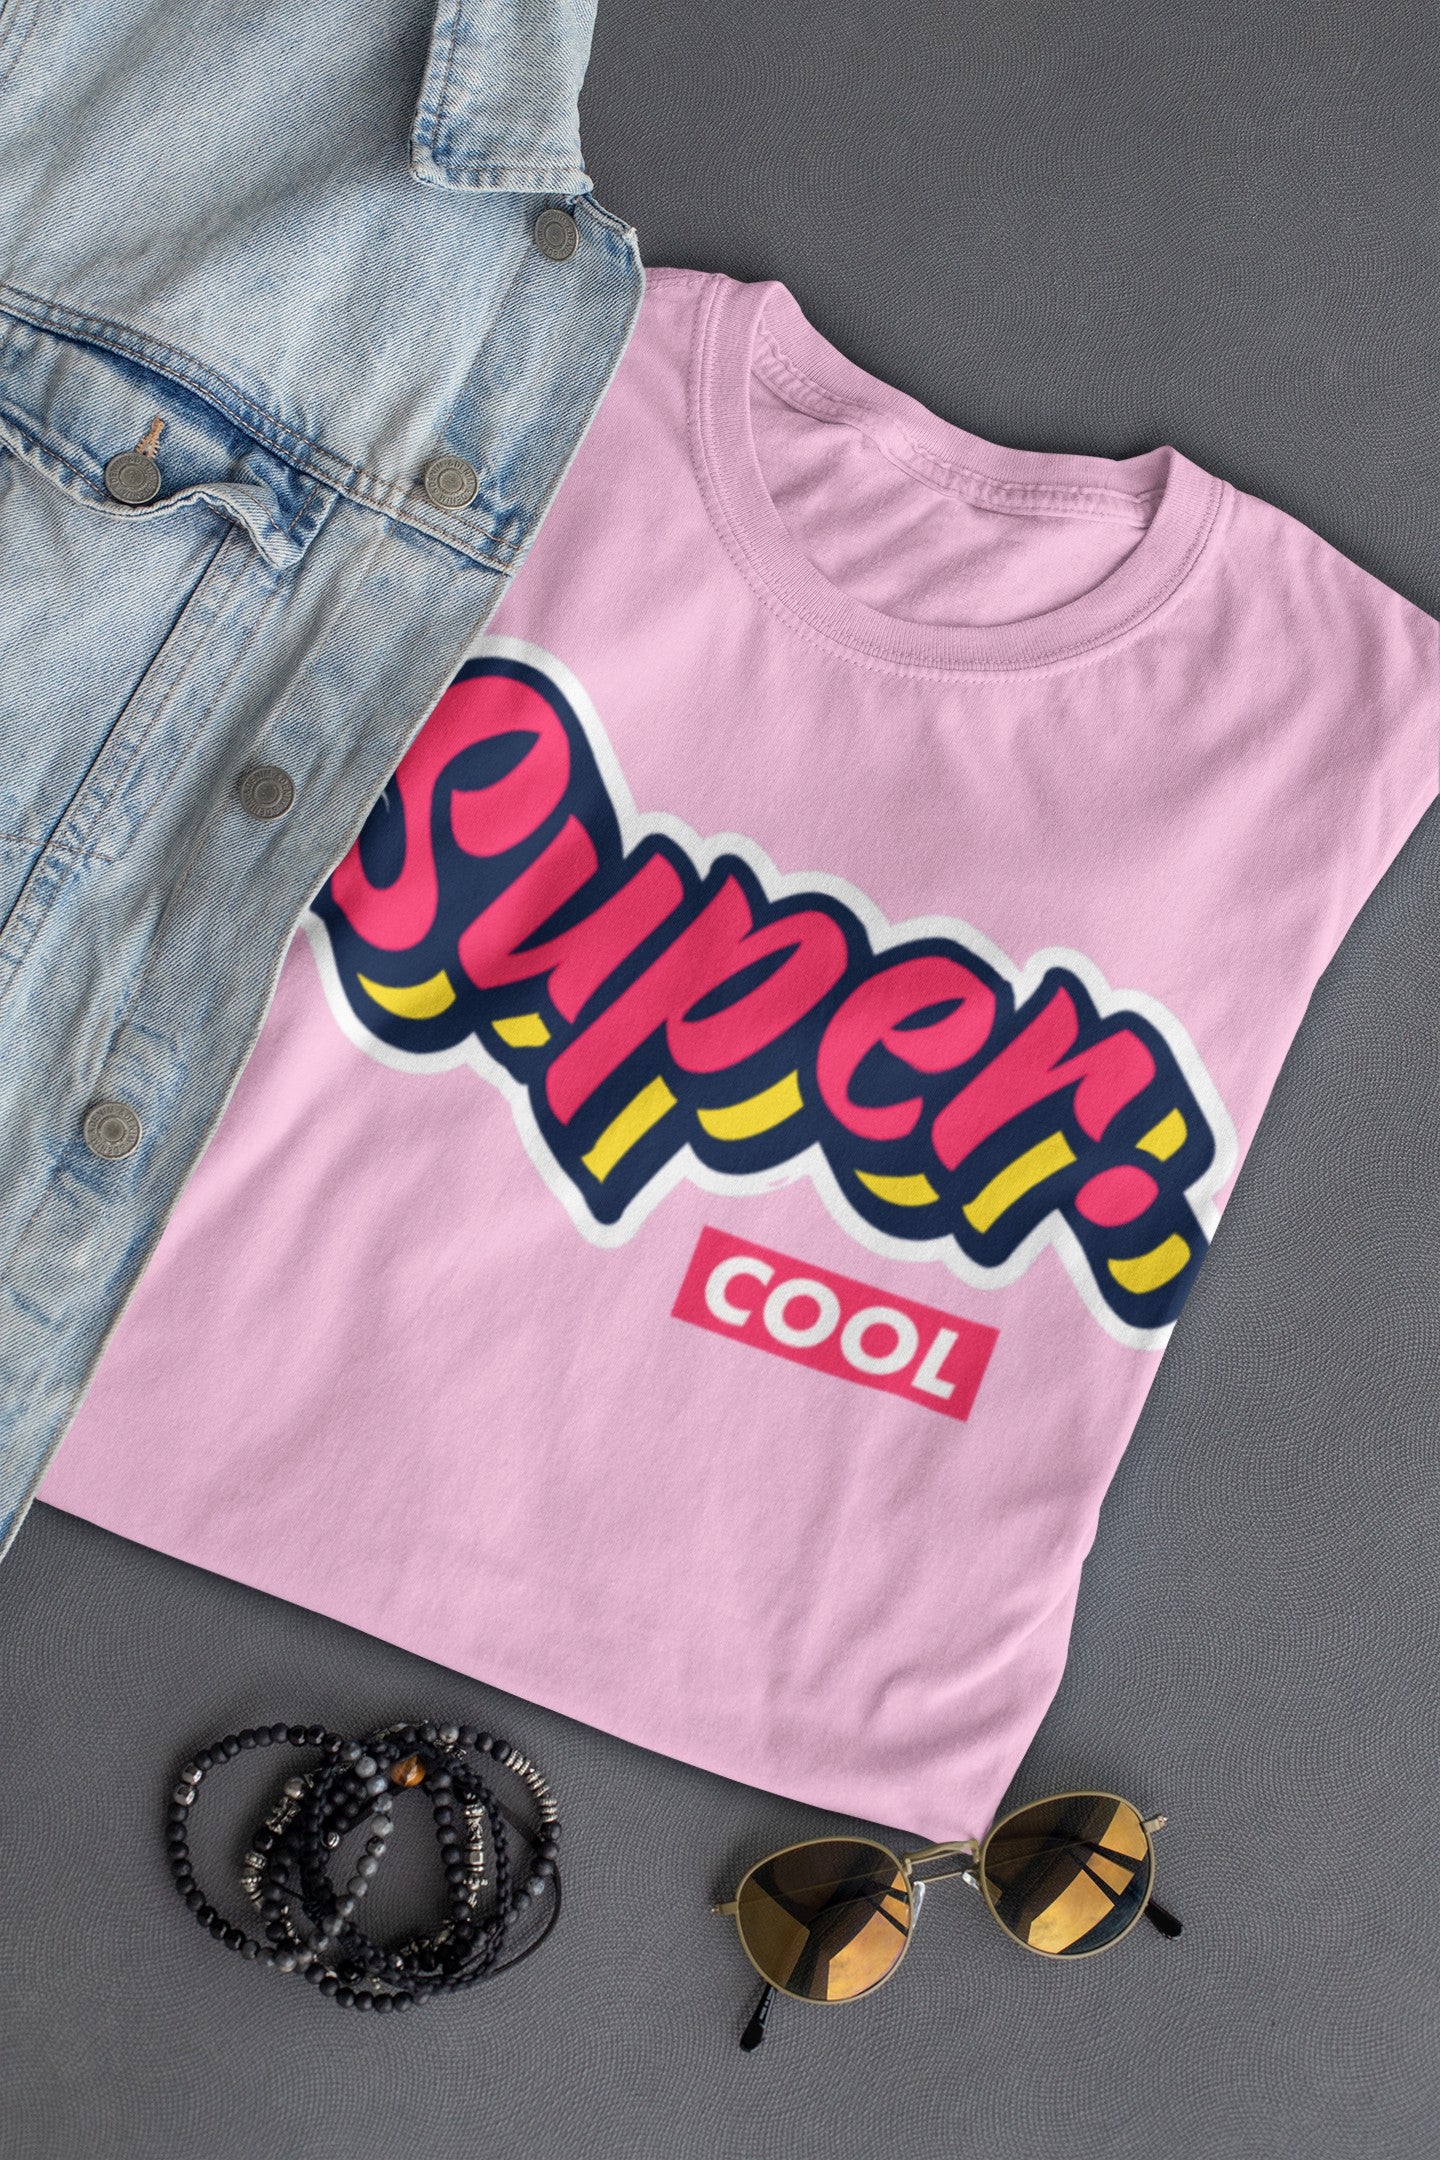 Gym T Shirt - Super Cool - Strong Soul - Sports T Shirt